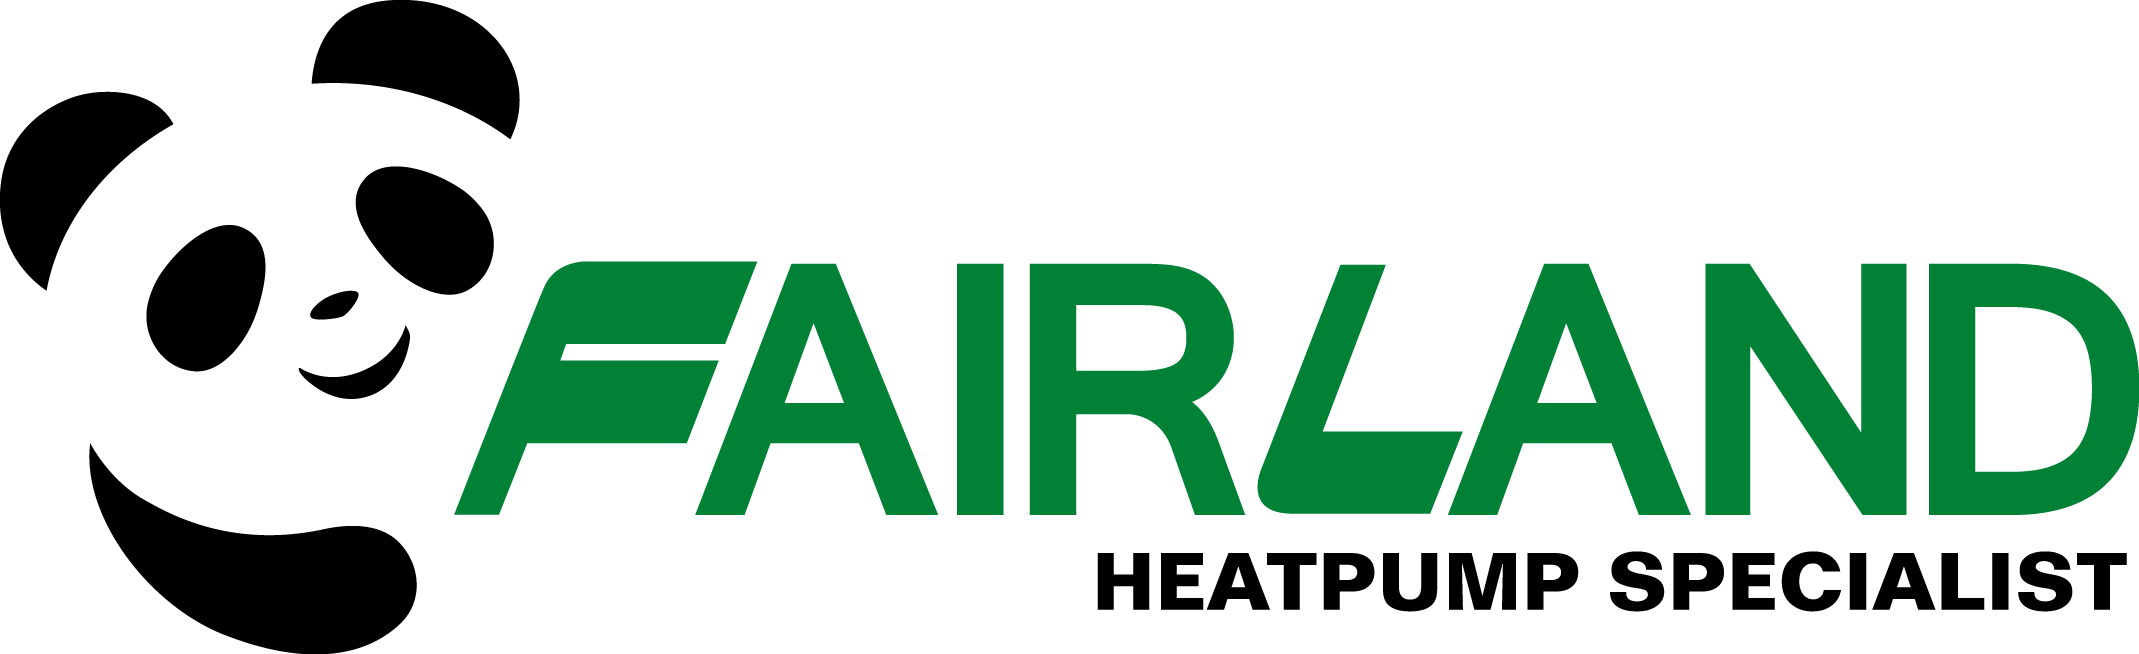 Fairland logo